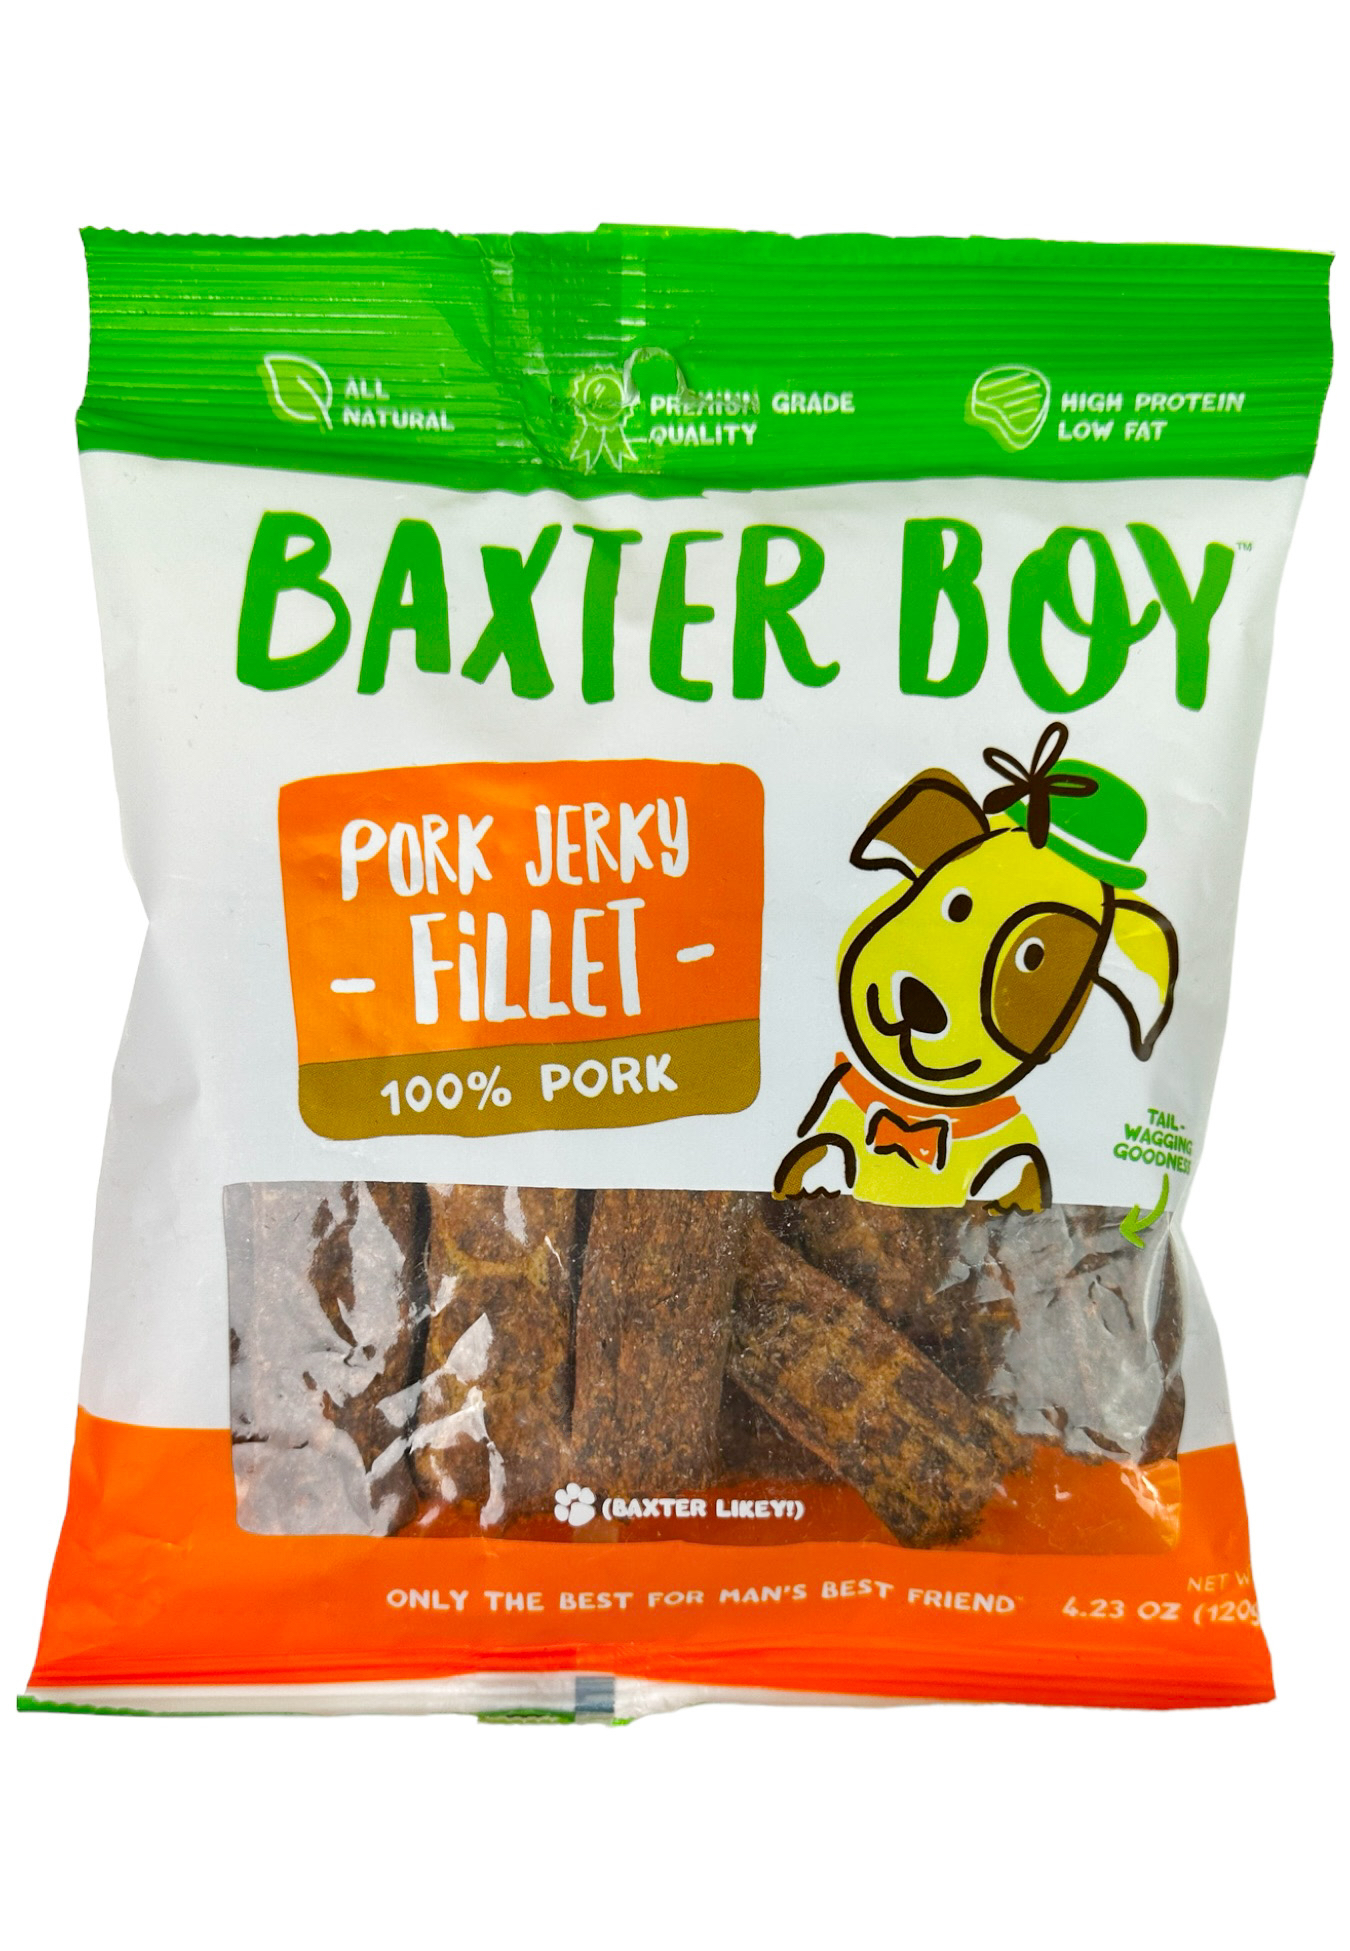 6 BAGS of Baxter Boy 100% Pork Soft Jerky Fillet Dog Treats $9.99 (reg $60)